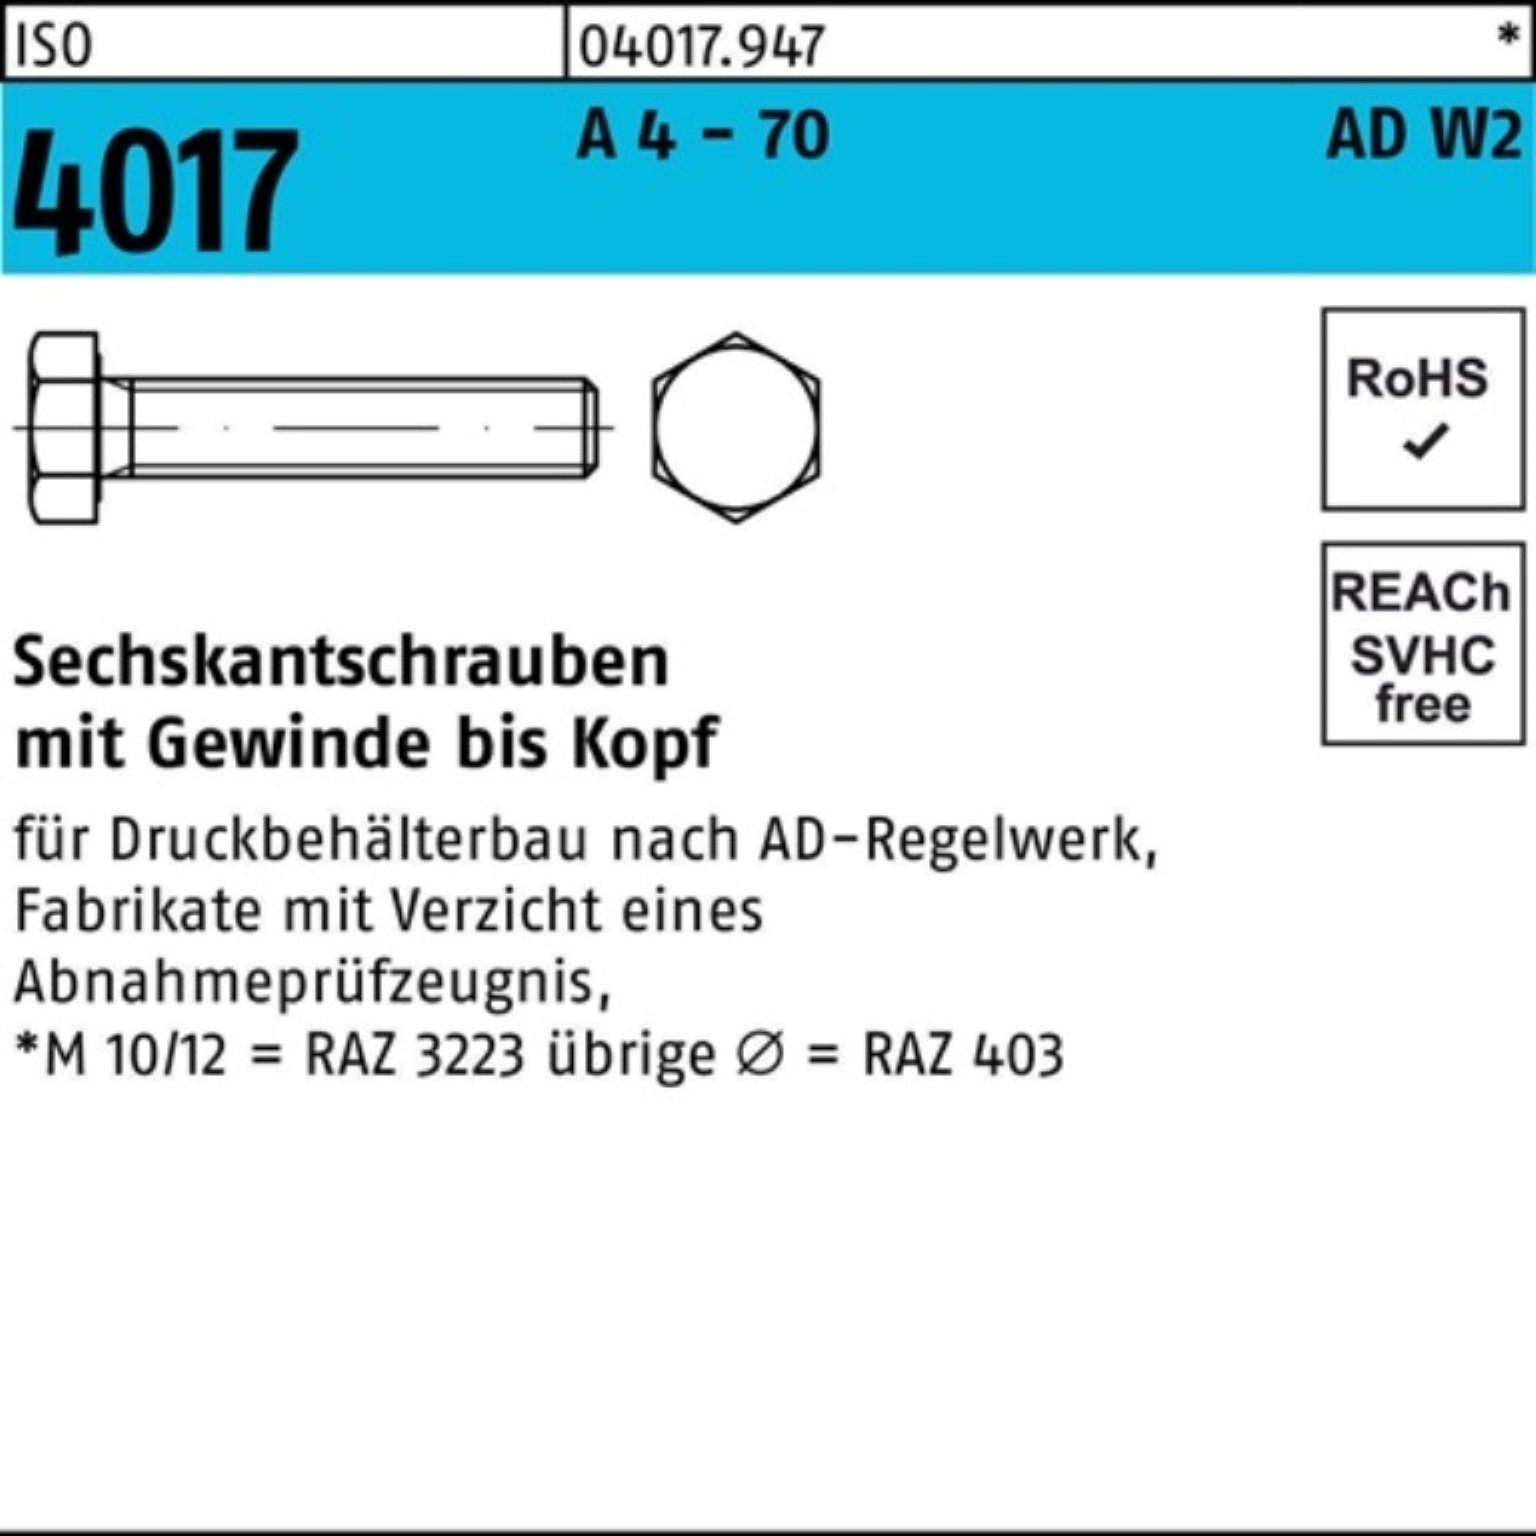 Bufab Sechskantschraube 100er Pack Sechskantschraube ISO 4017 VG M20x 65 A 4 - 70 AD-W2 25 St